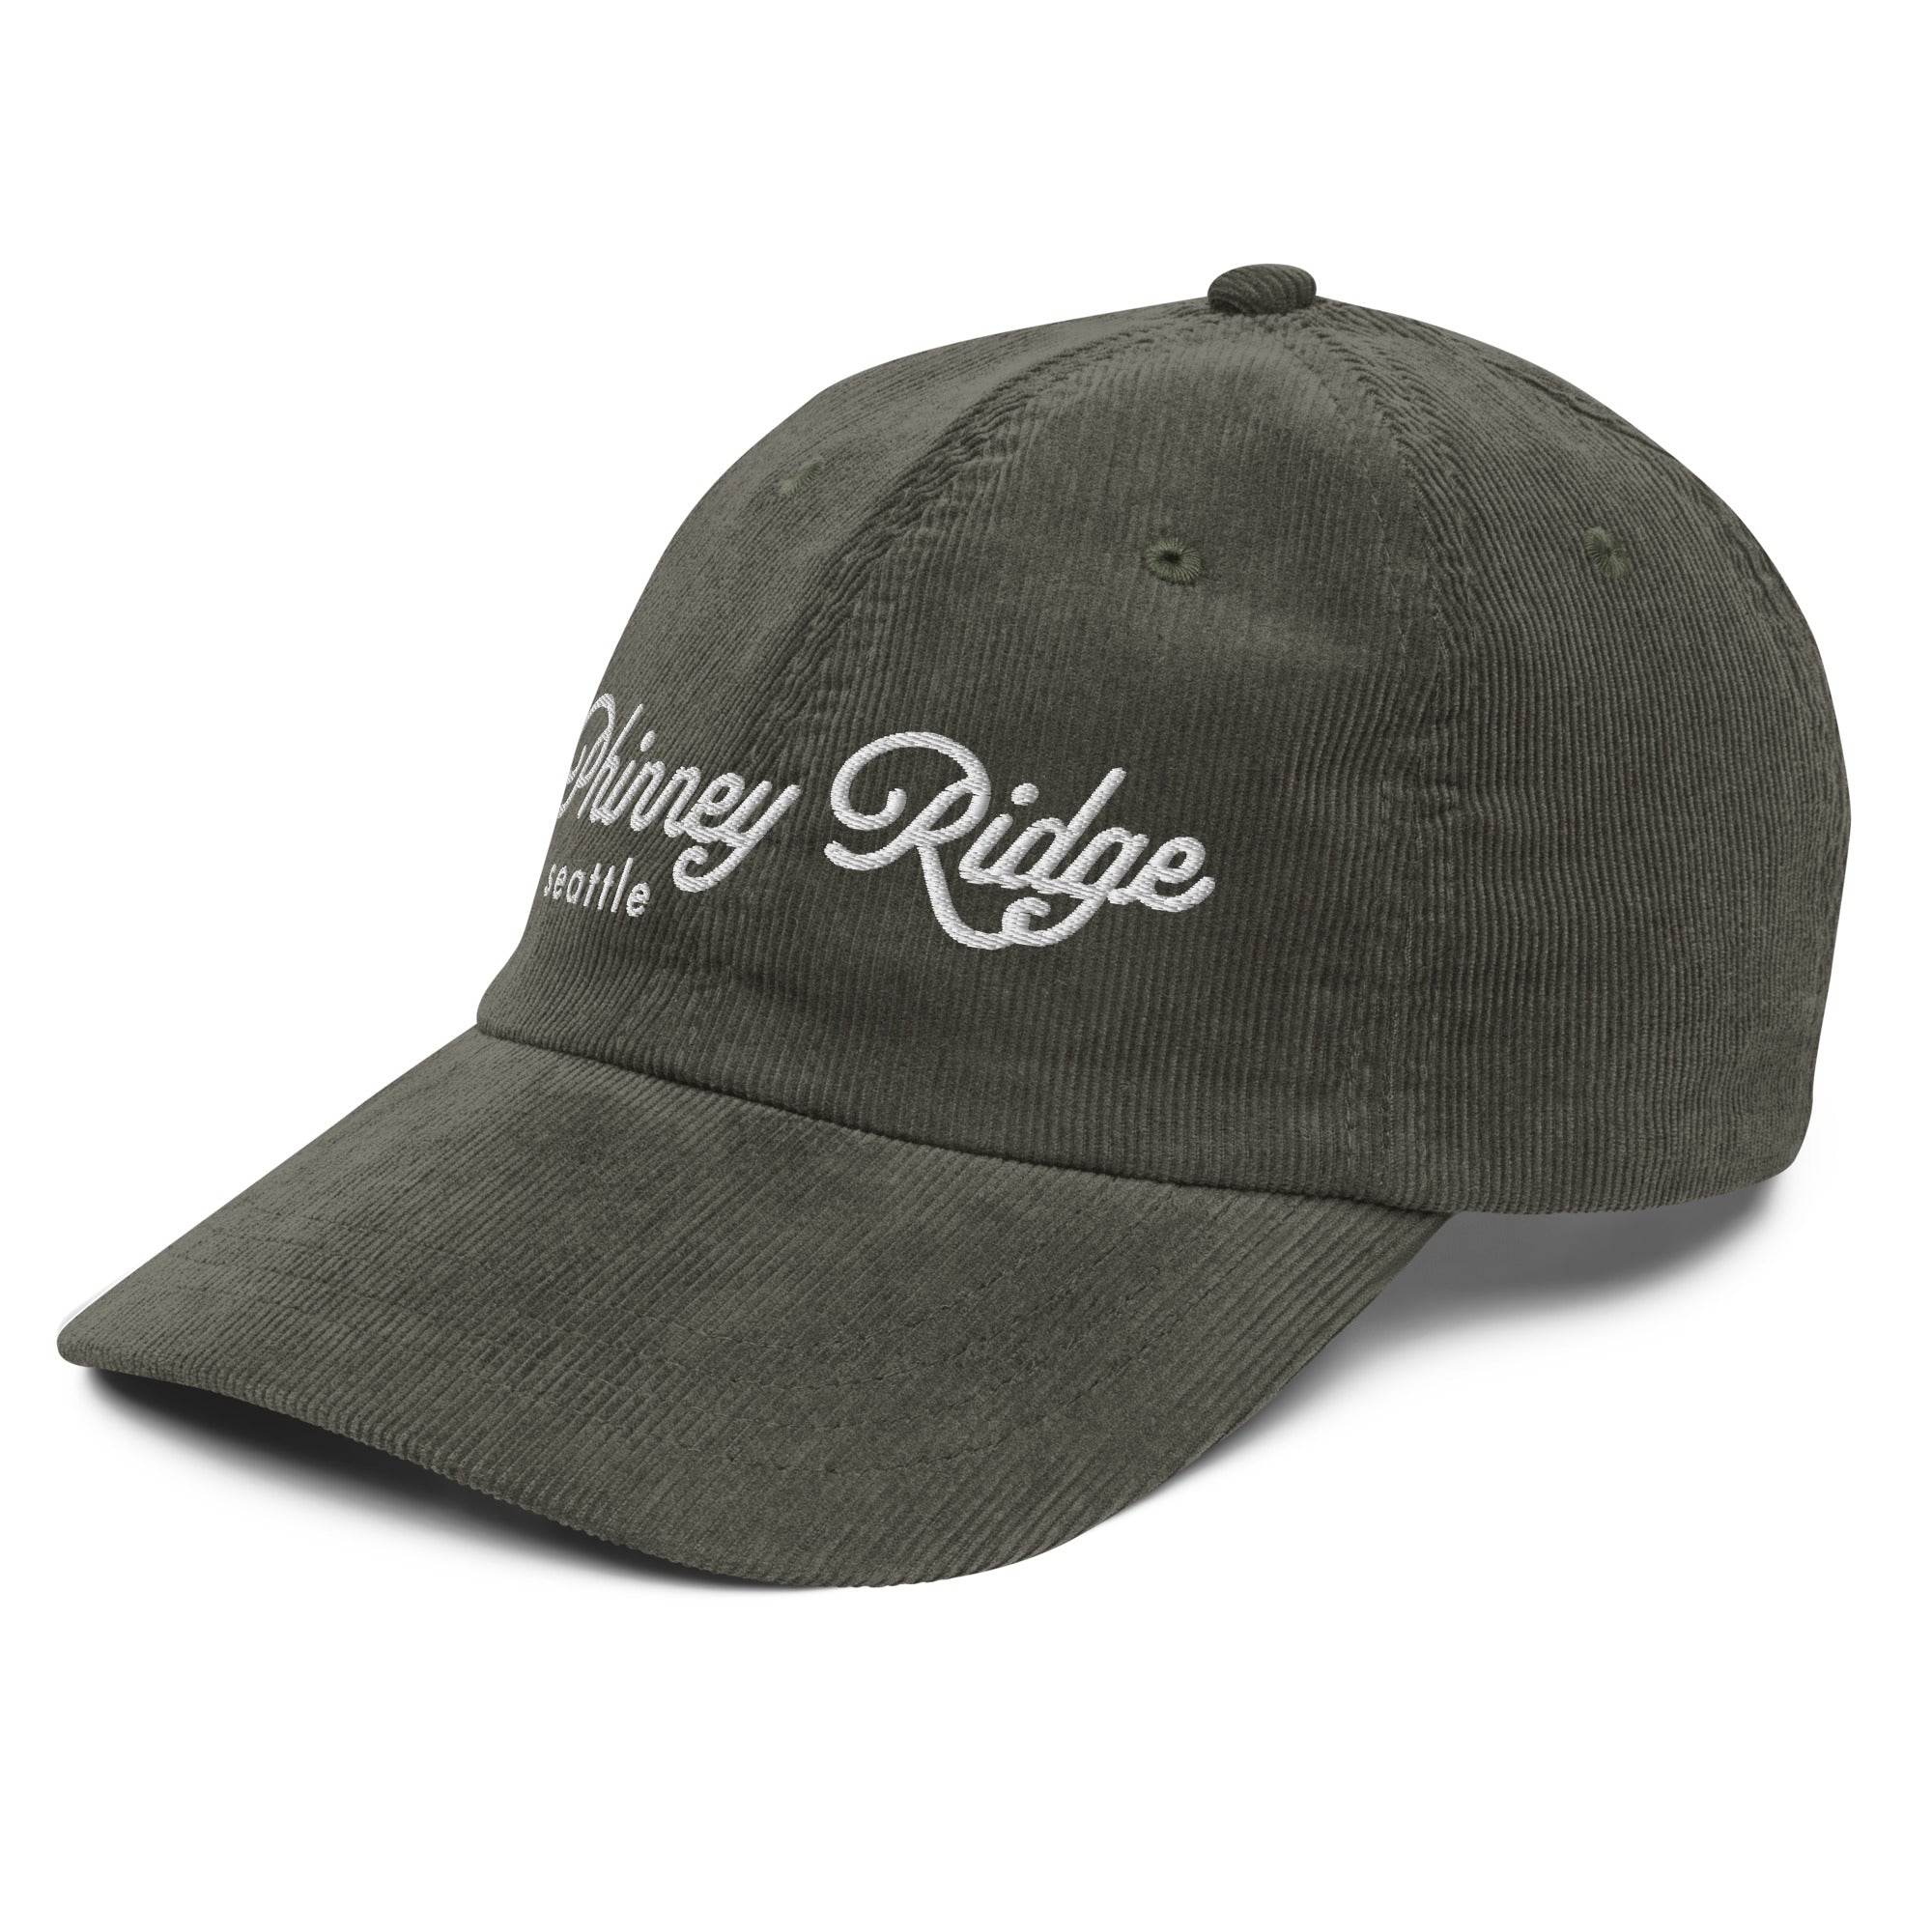 Script Corduroy Hat - Phinney Ridge | Seattle, WA